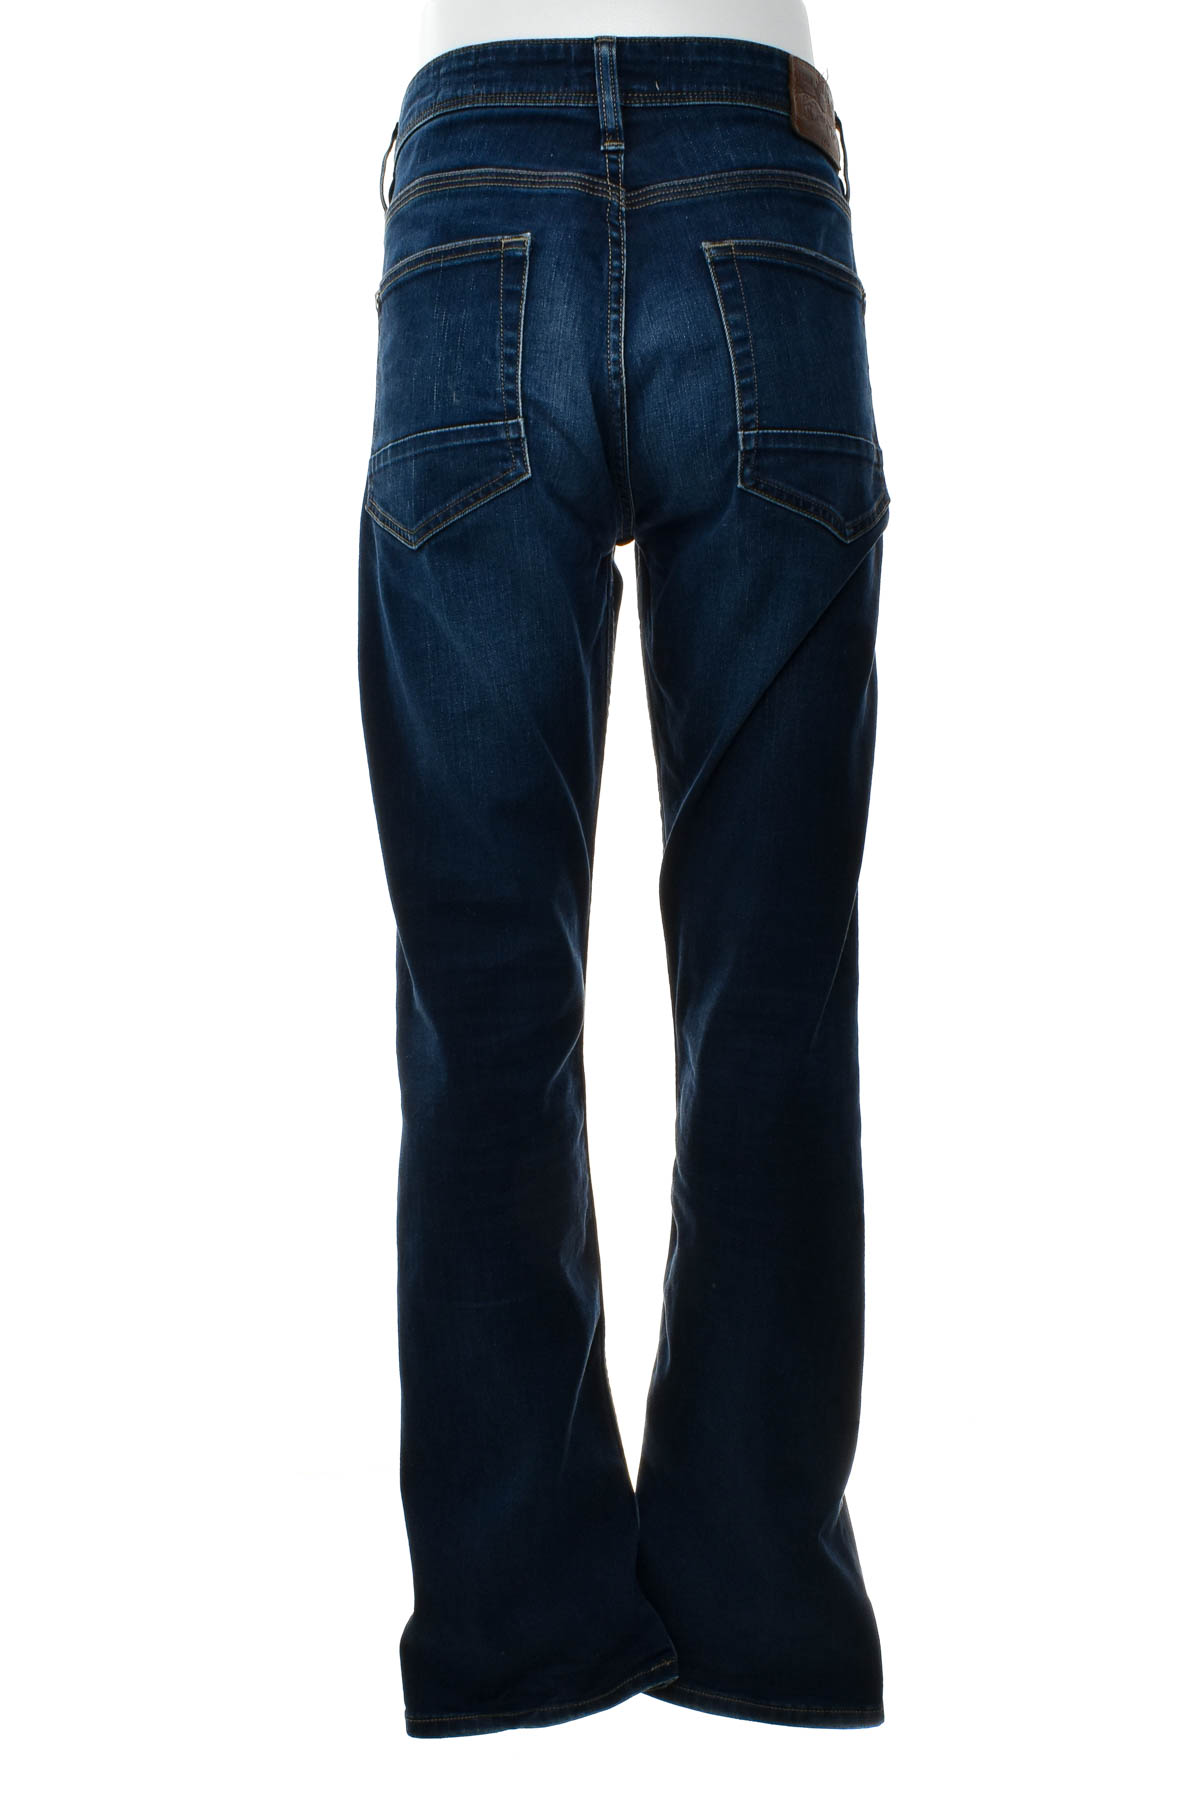 Men's jeans - Celio - 1